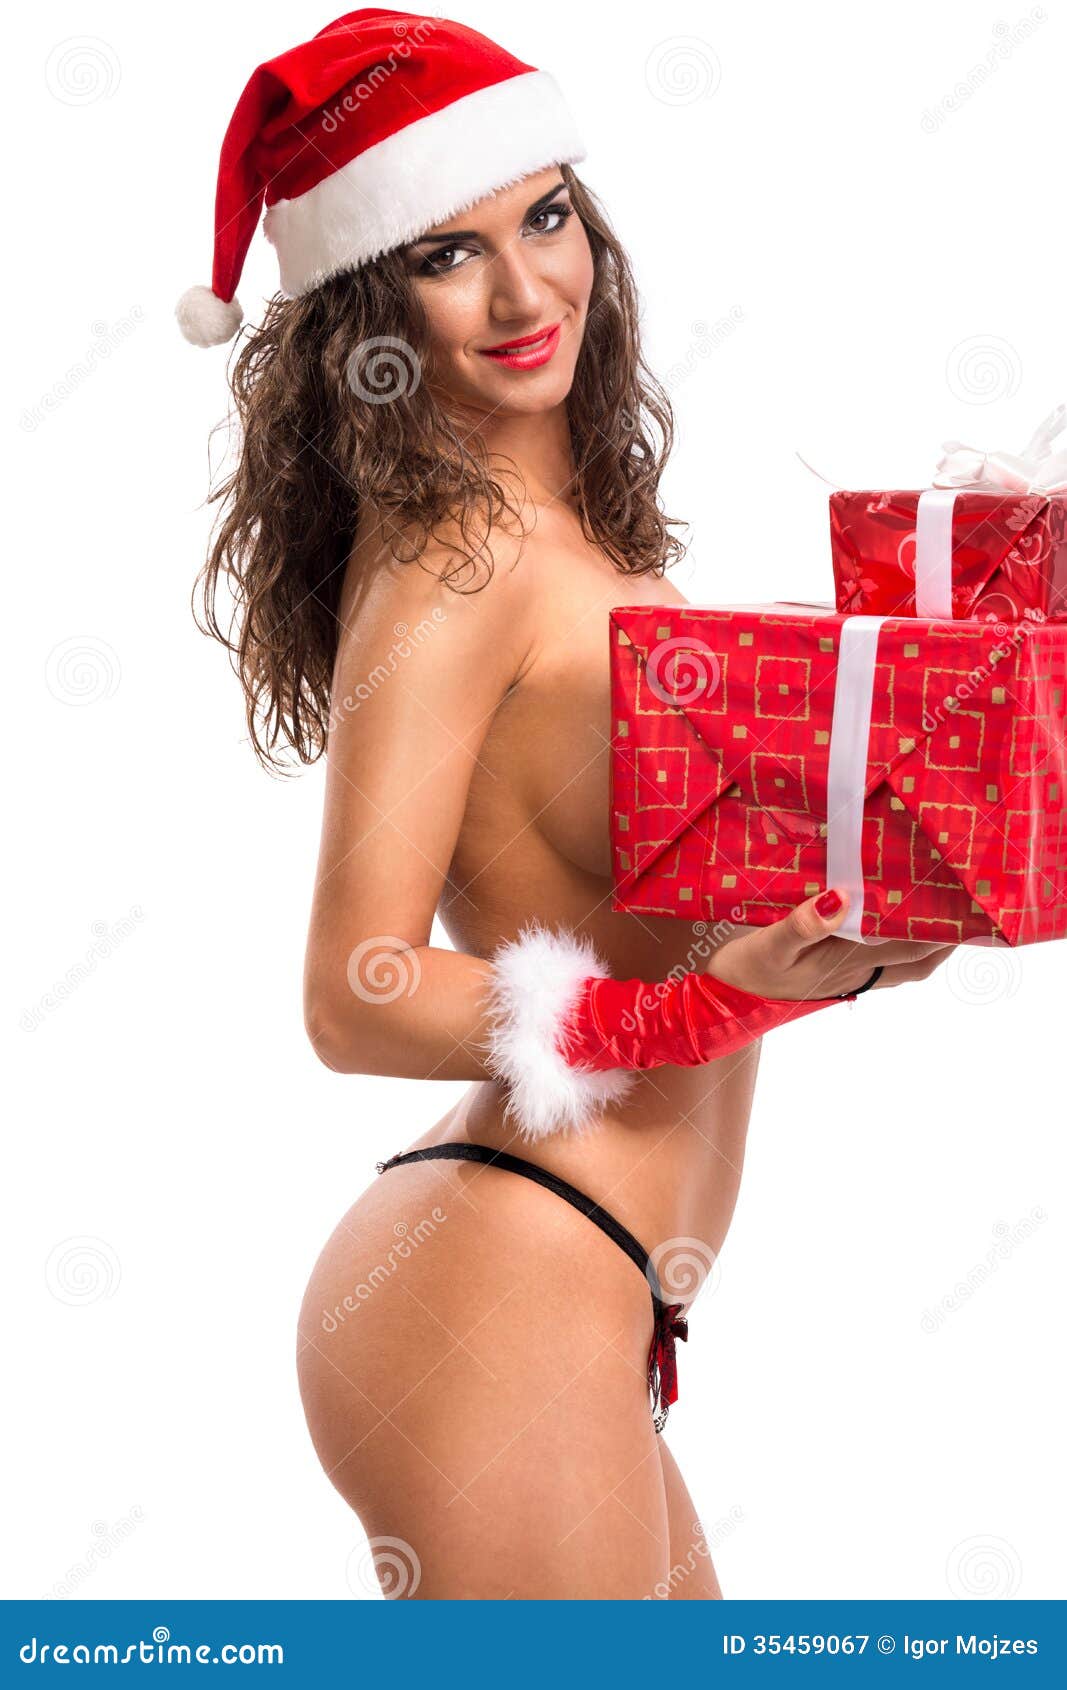 Nude Christmas Woman Holding Present Stock Image